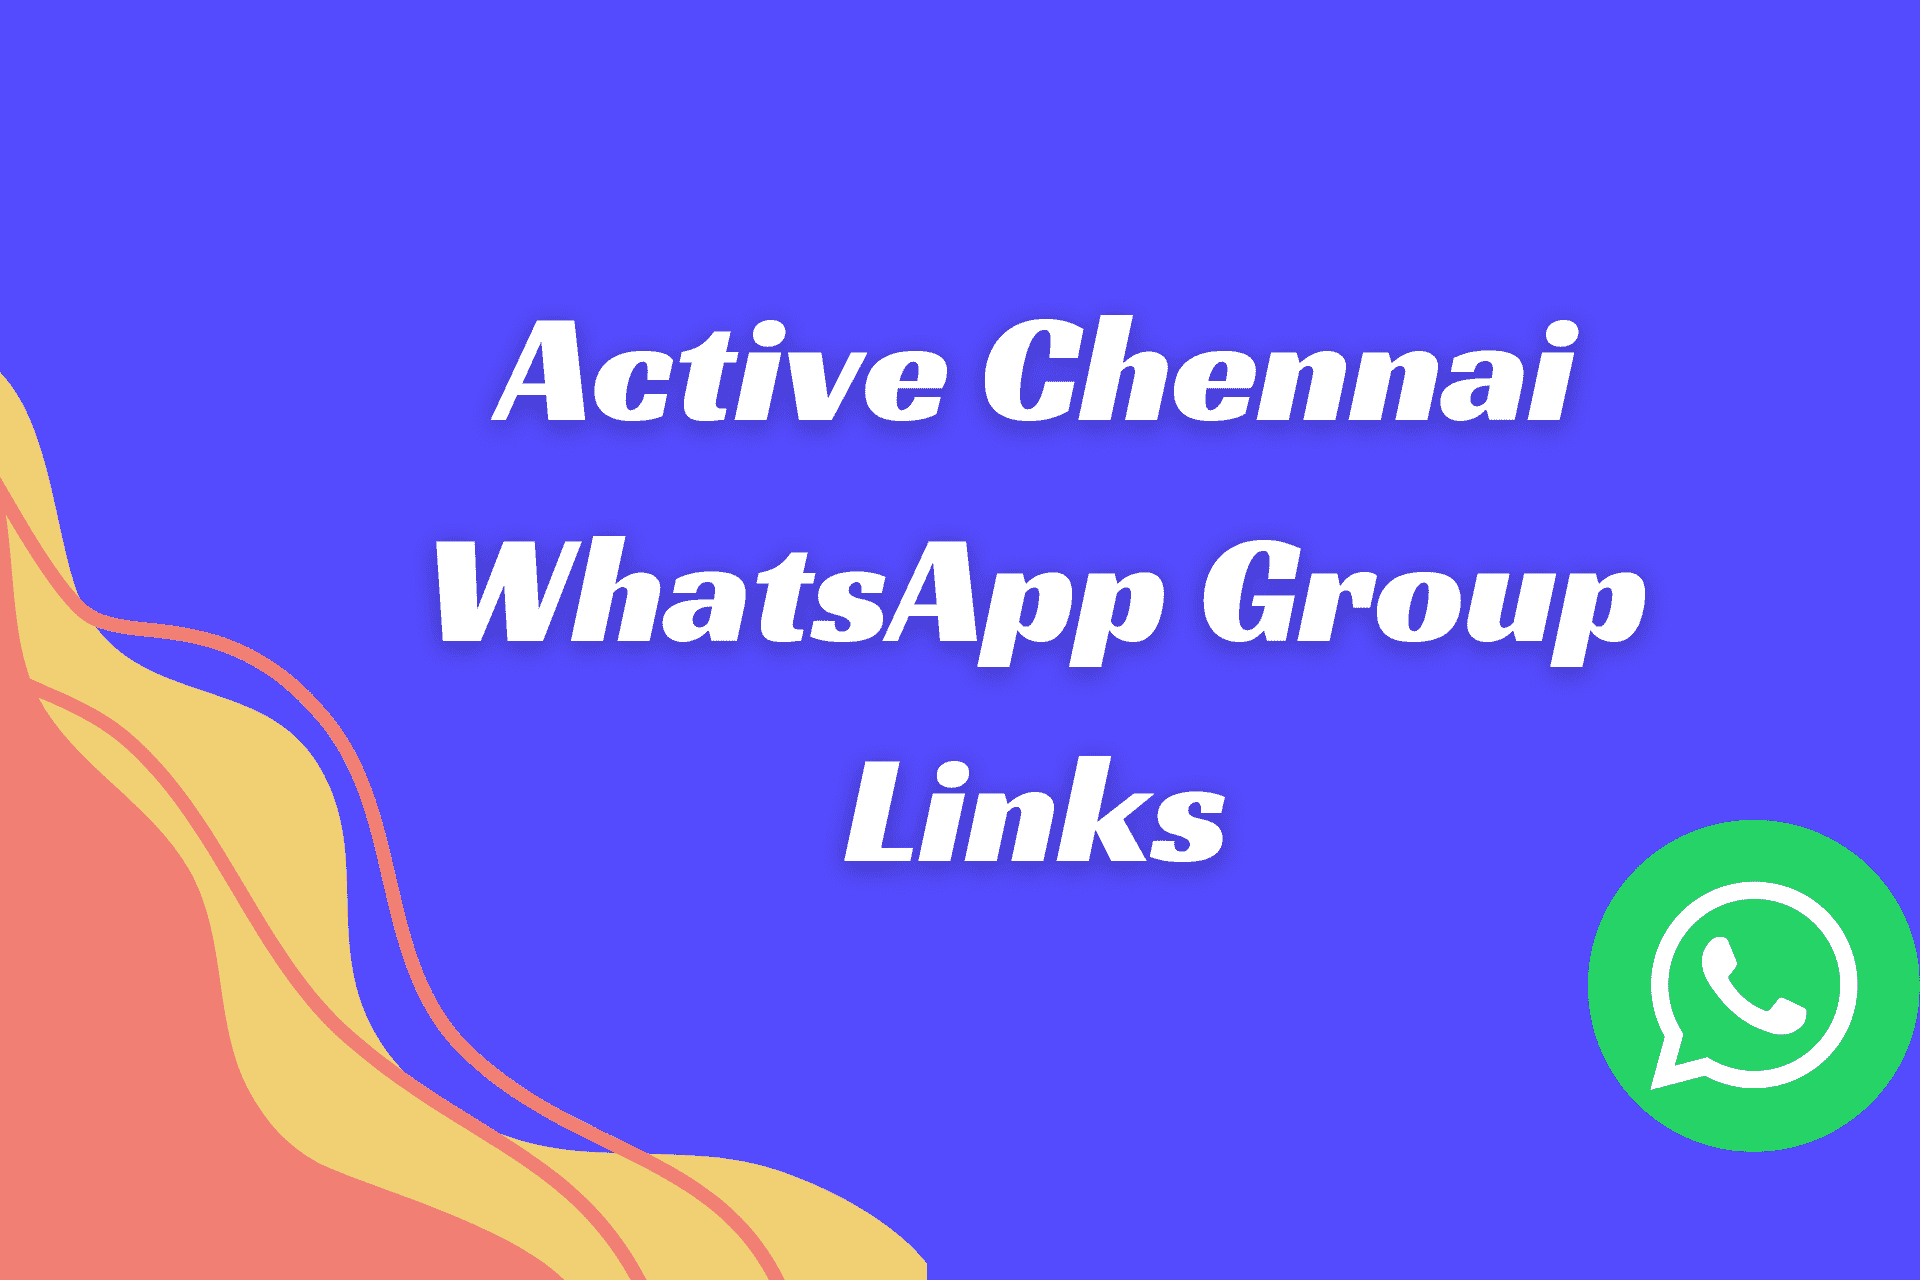 Active Chennai WhatsApp Group Link.